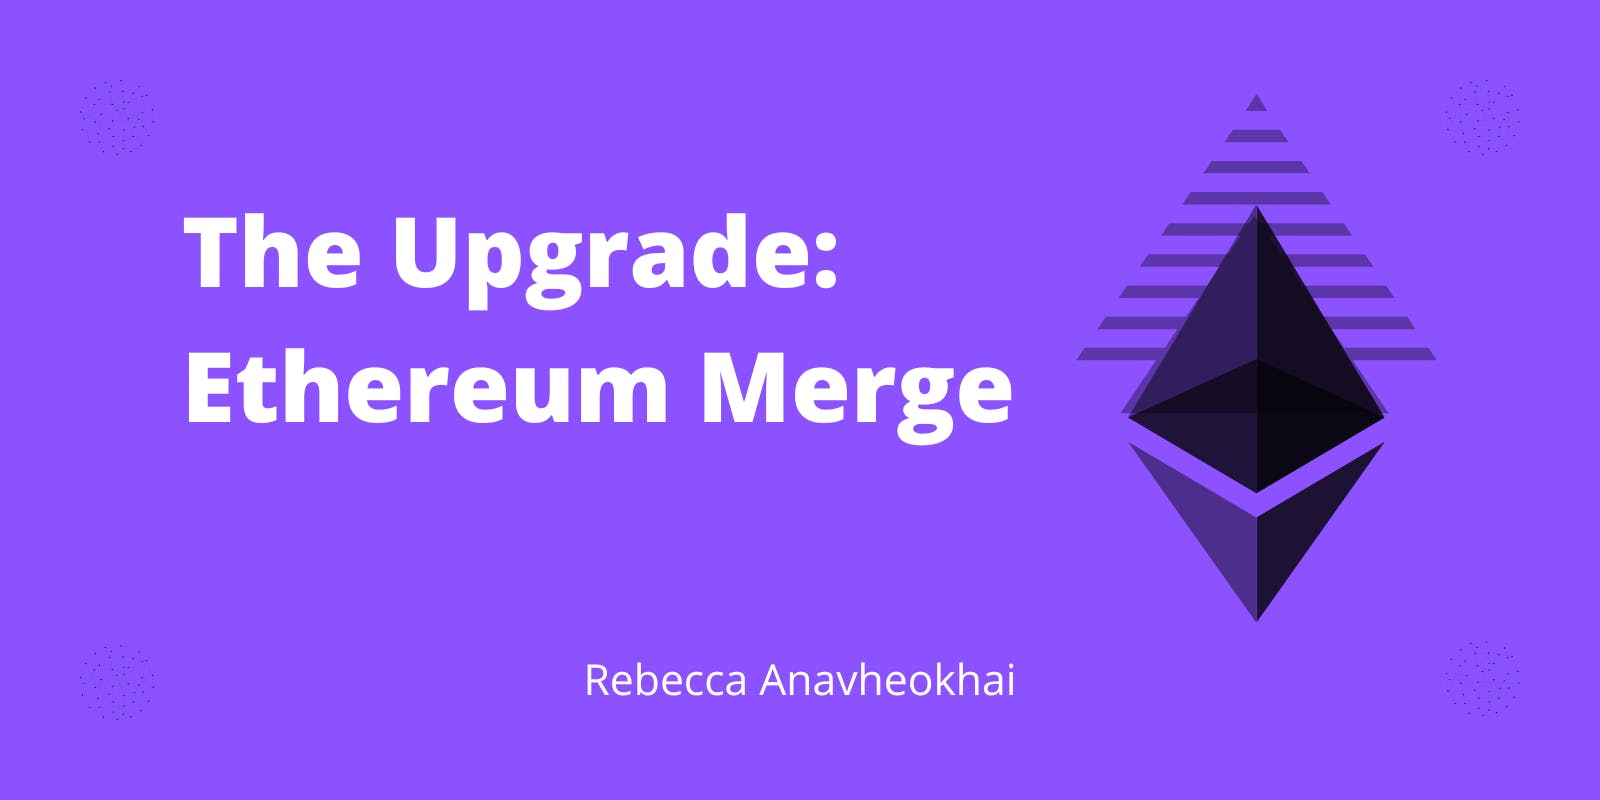 The Upgrade: Ethereum Merge.